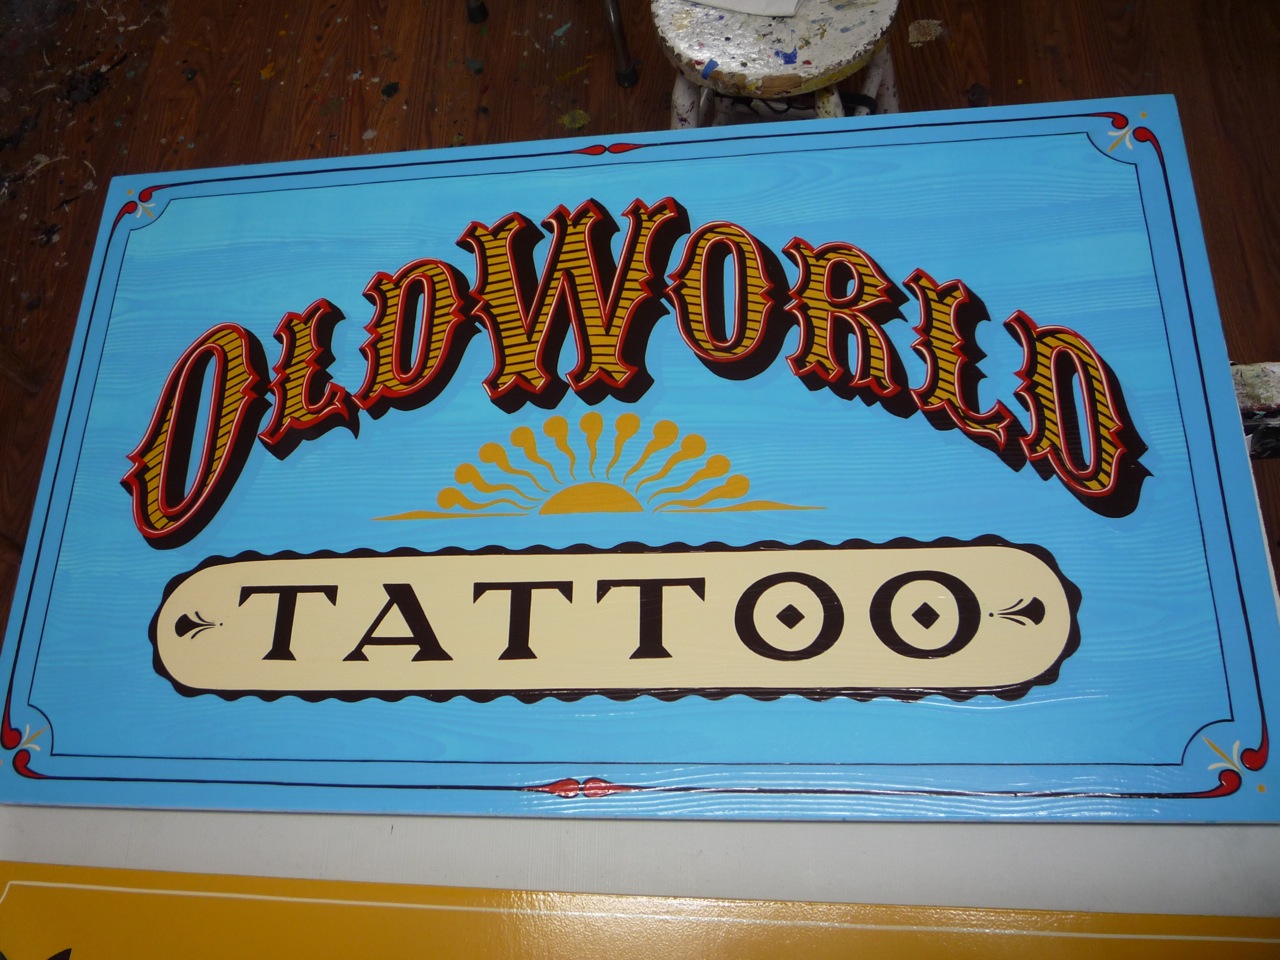 HAND-old-world-tattoo-fancy_4844777250_o.jpg